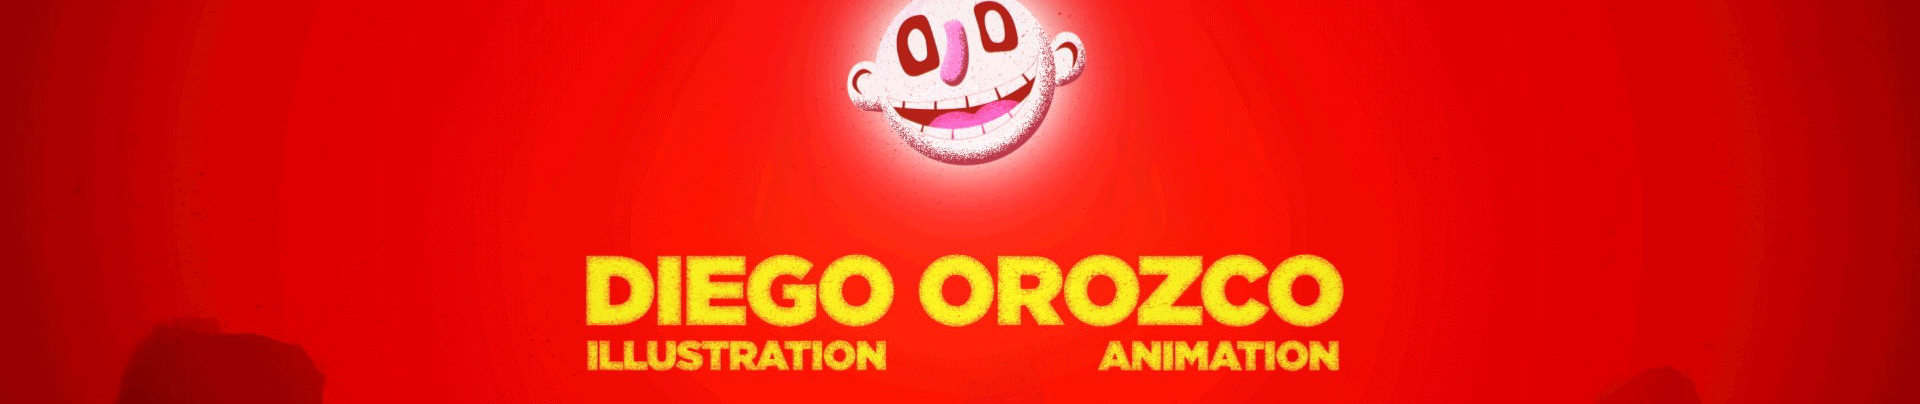 DIEGO OROZCO's profile banner